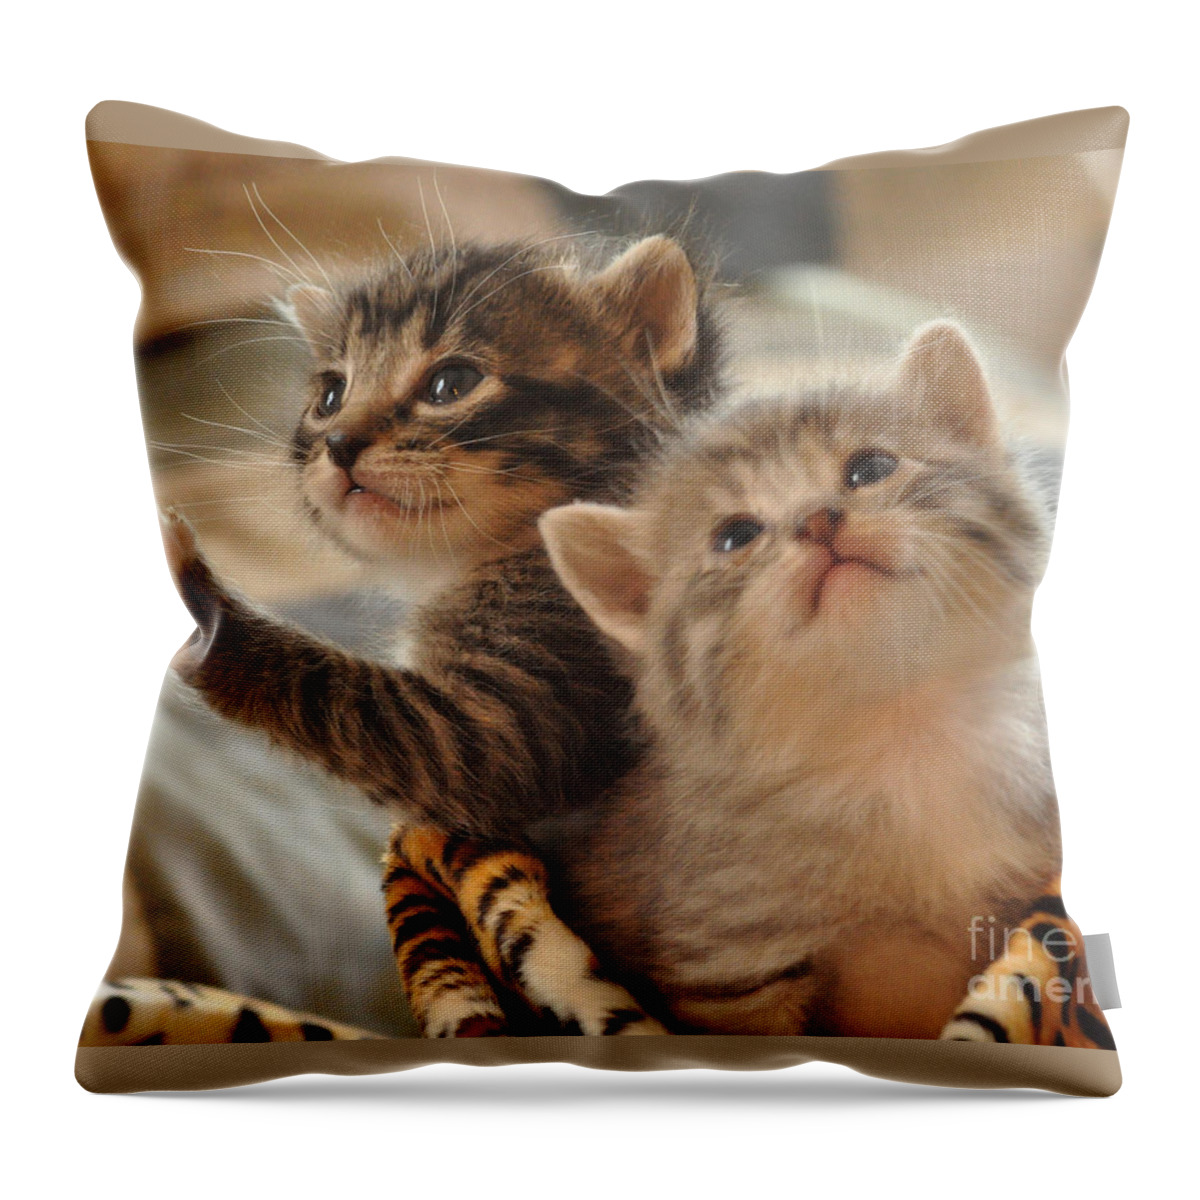 Kittens Throw Pillow featuring the photograph Playful kittens by Debby Pueschel